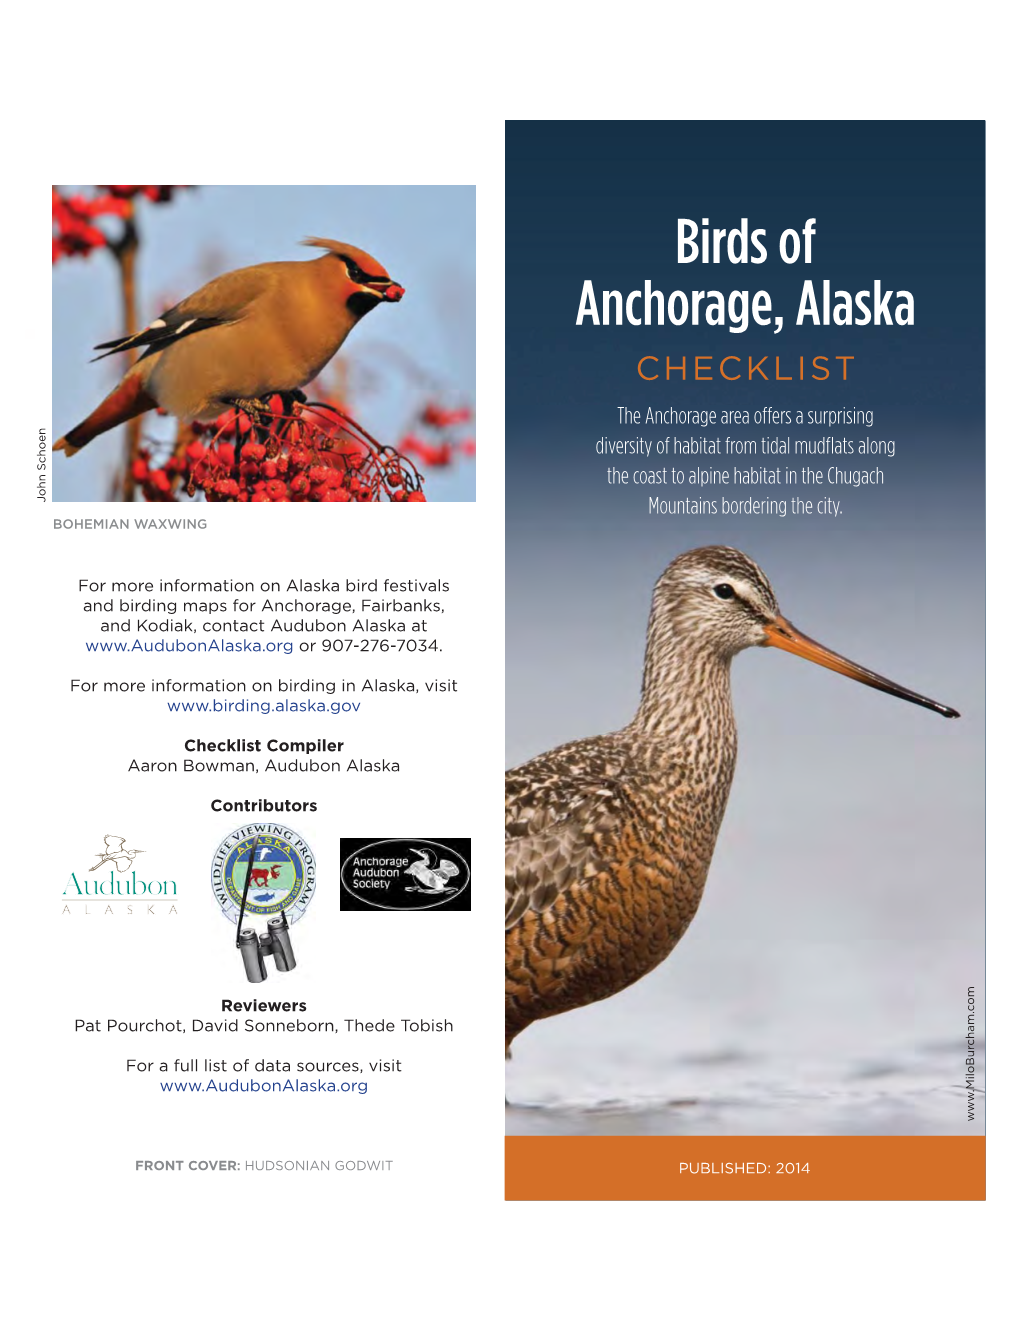 Birds of Anchorage Checklist